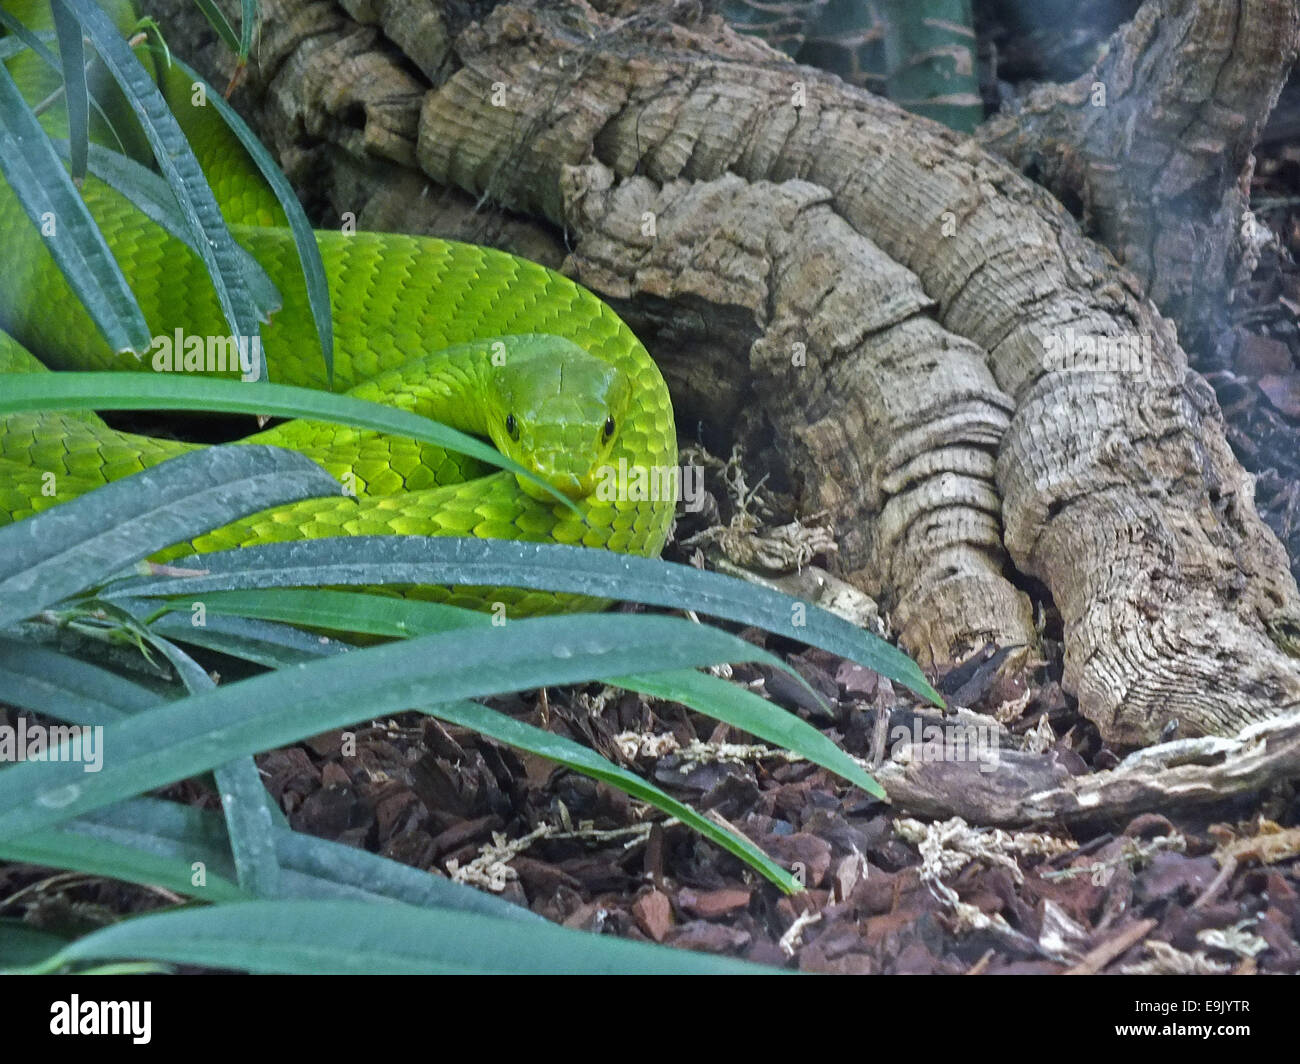 Western green mamba (Dendroaspis viridis) Stock Photo